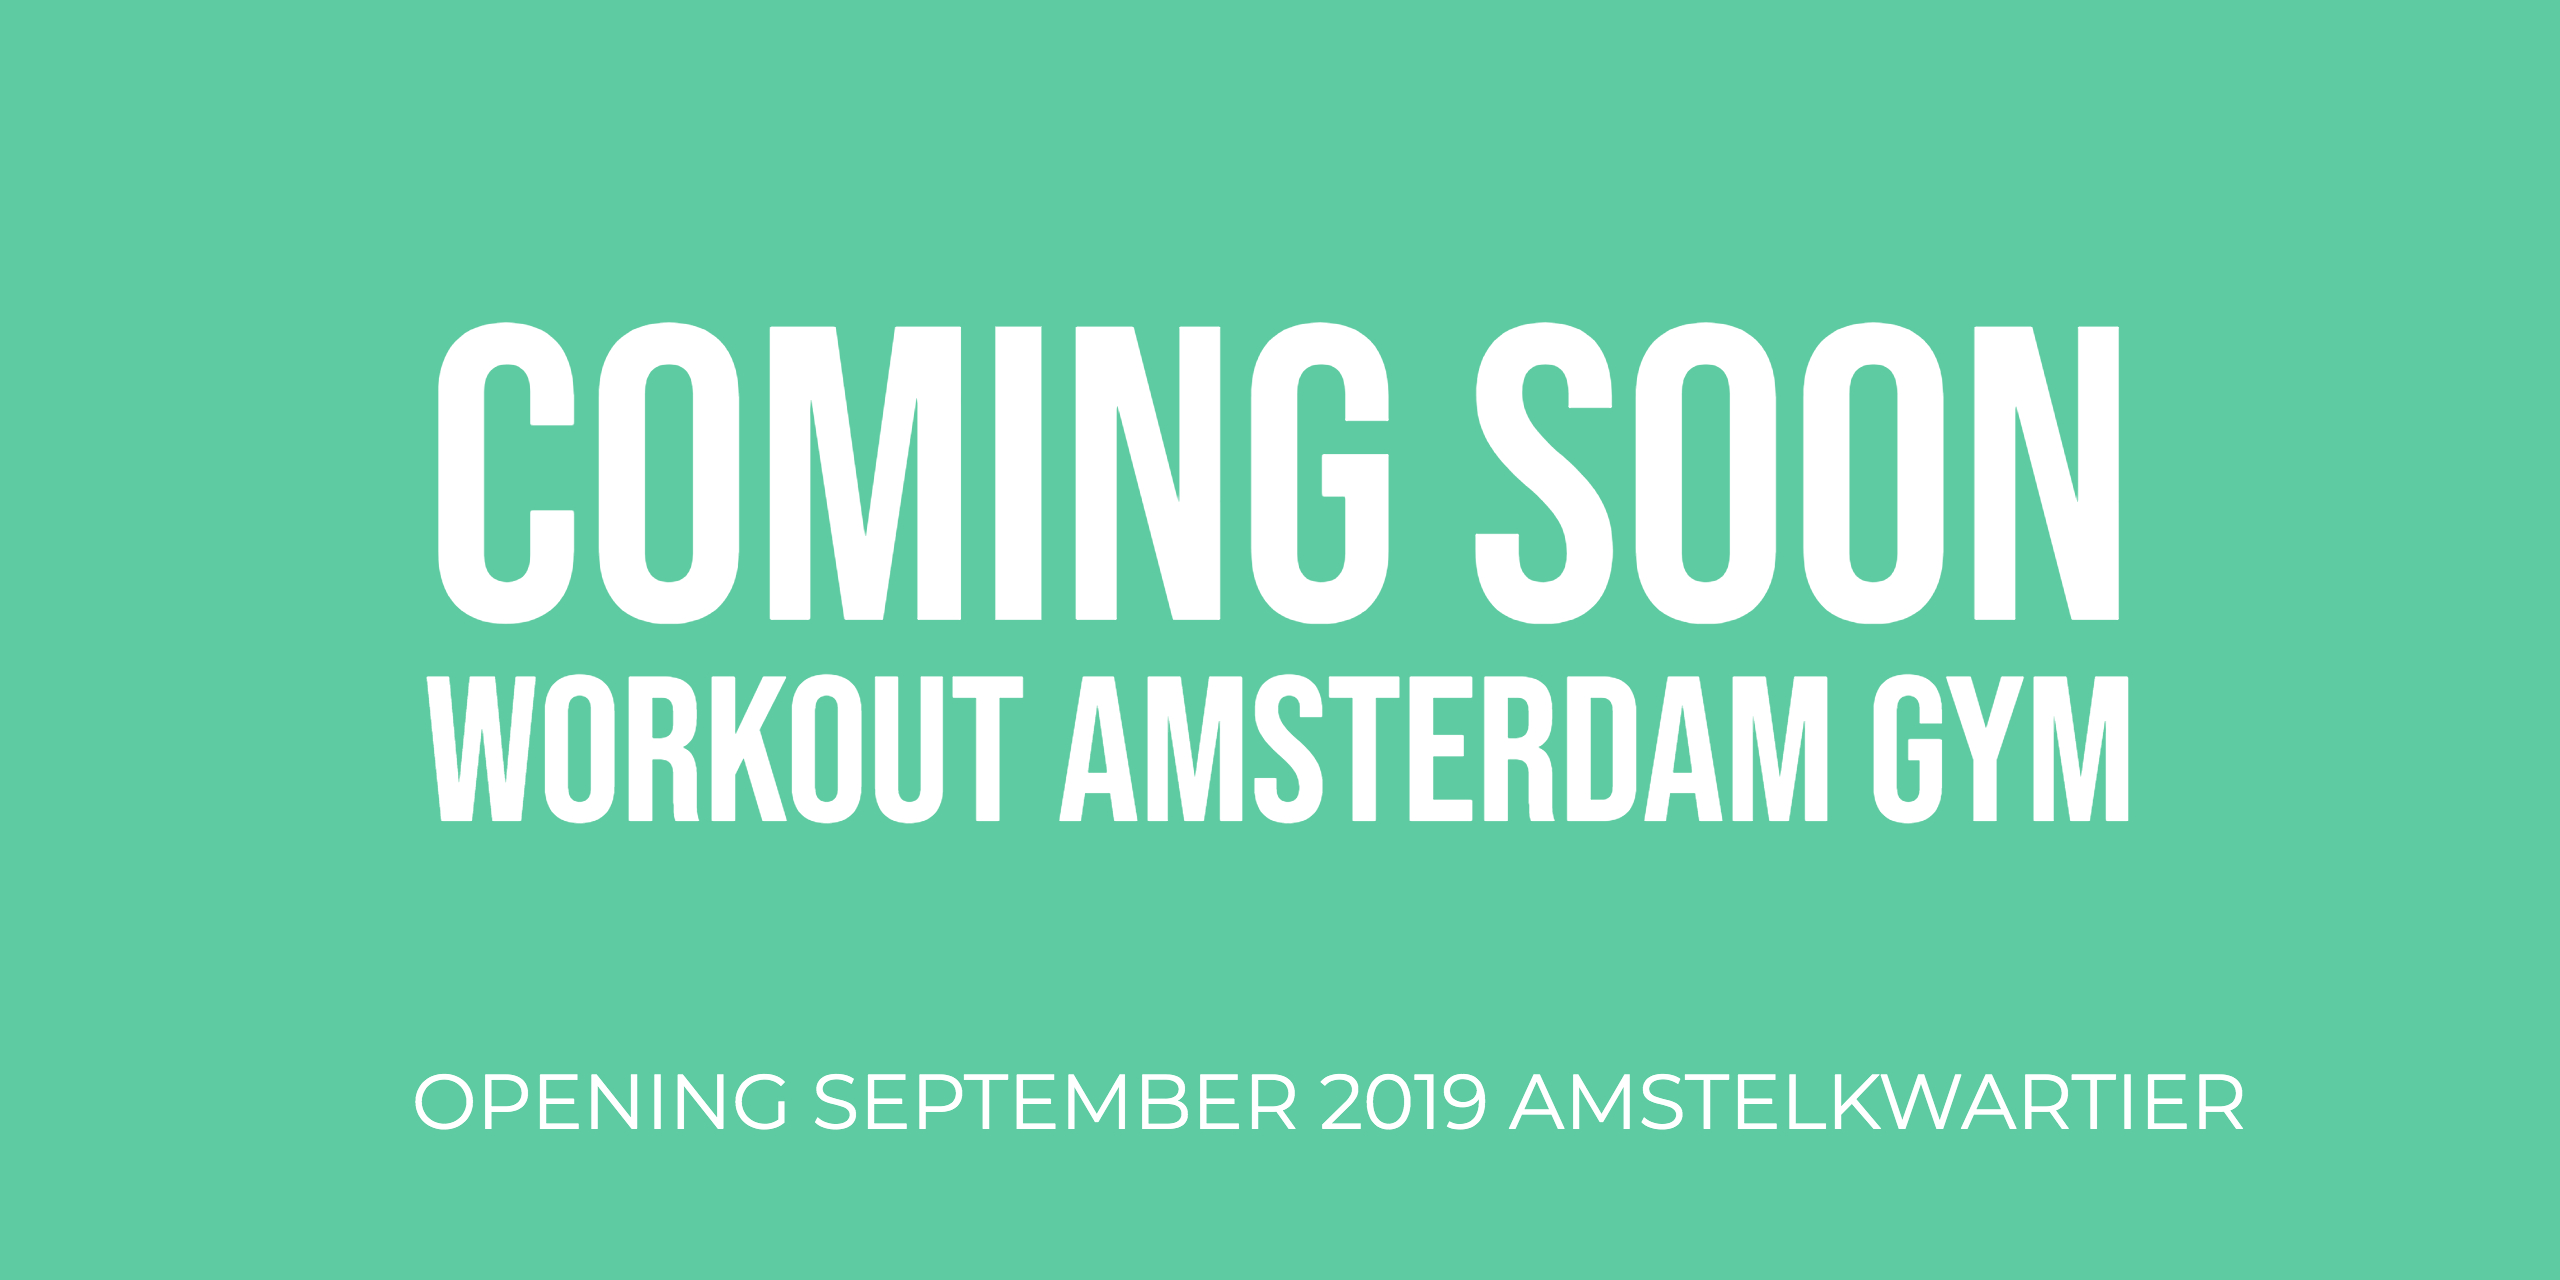 Workout Amsterdam Amstelkwartier